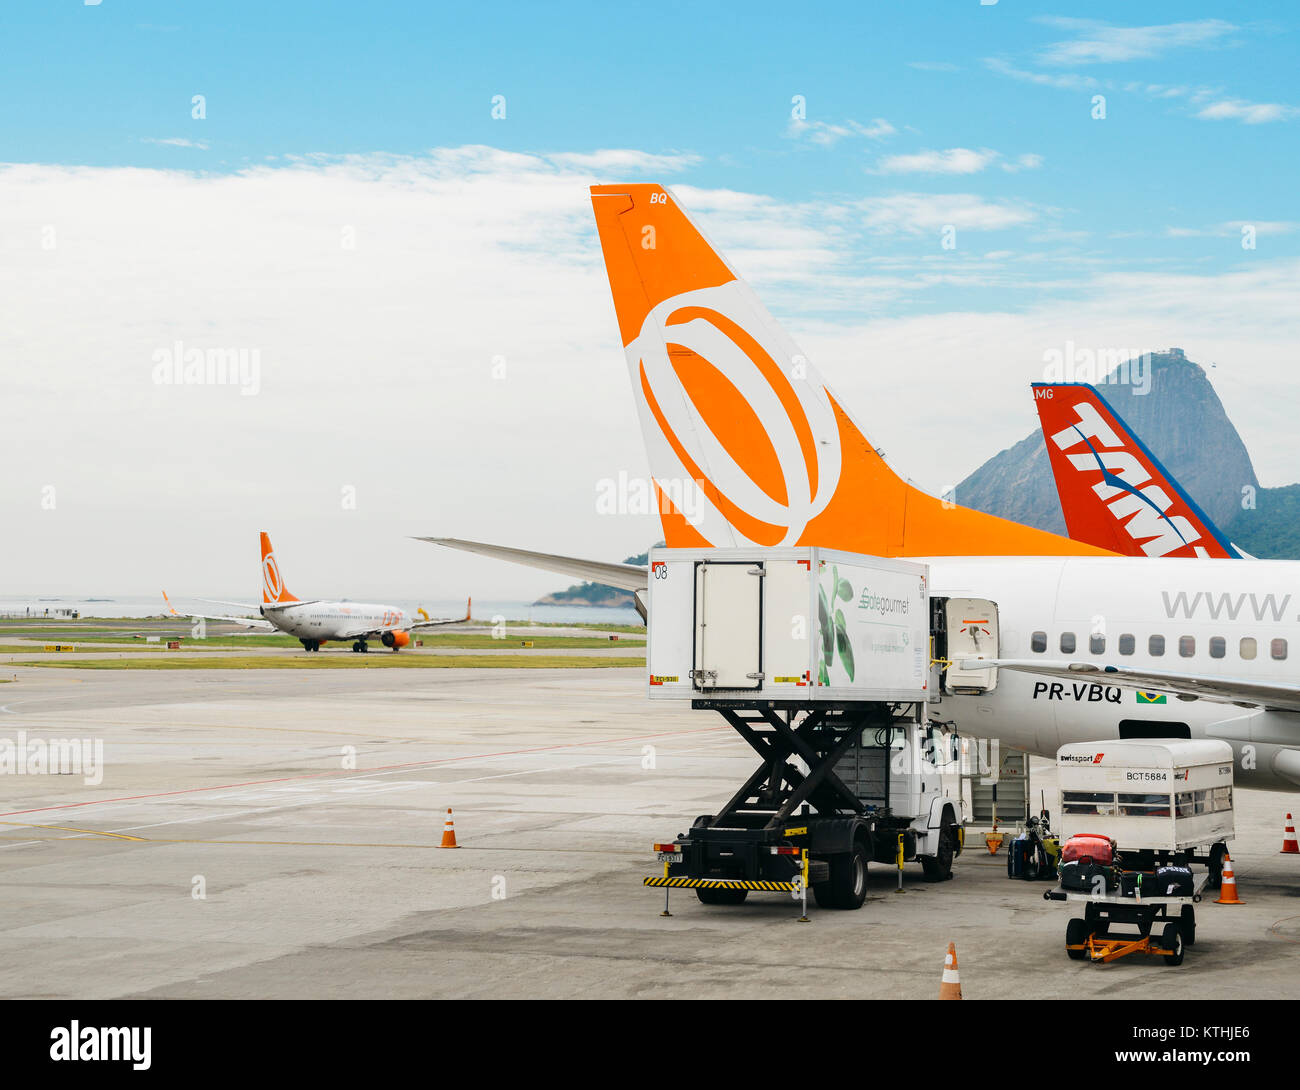 Santos Dumont Airport, Rio de Janeiro, Brazil - Dec 22, 2017: Airplanes at Rio de Janeiro's Santos Dumont Airport servicing domestic flights Stock Photo